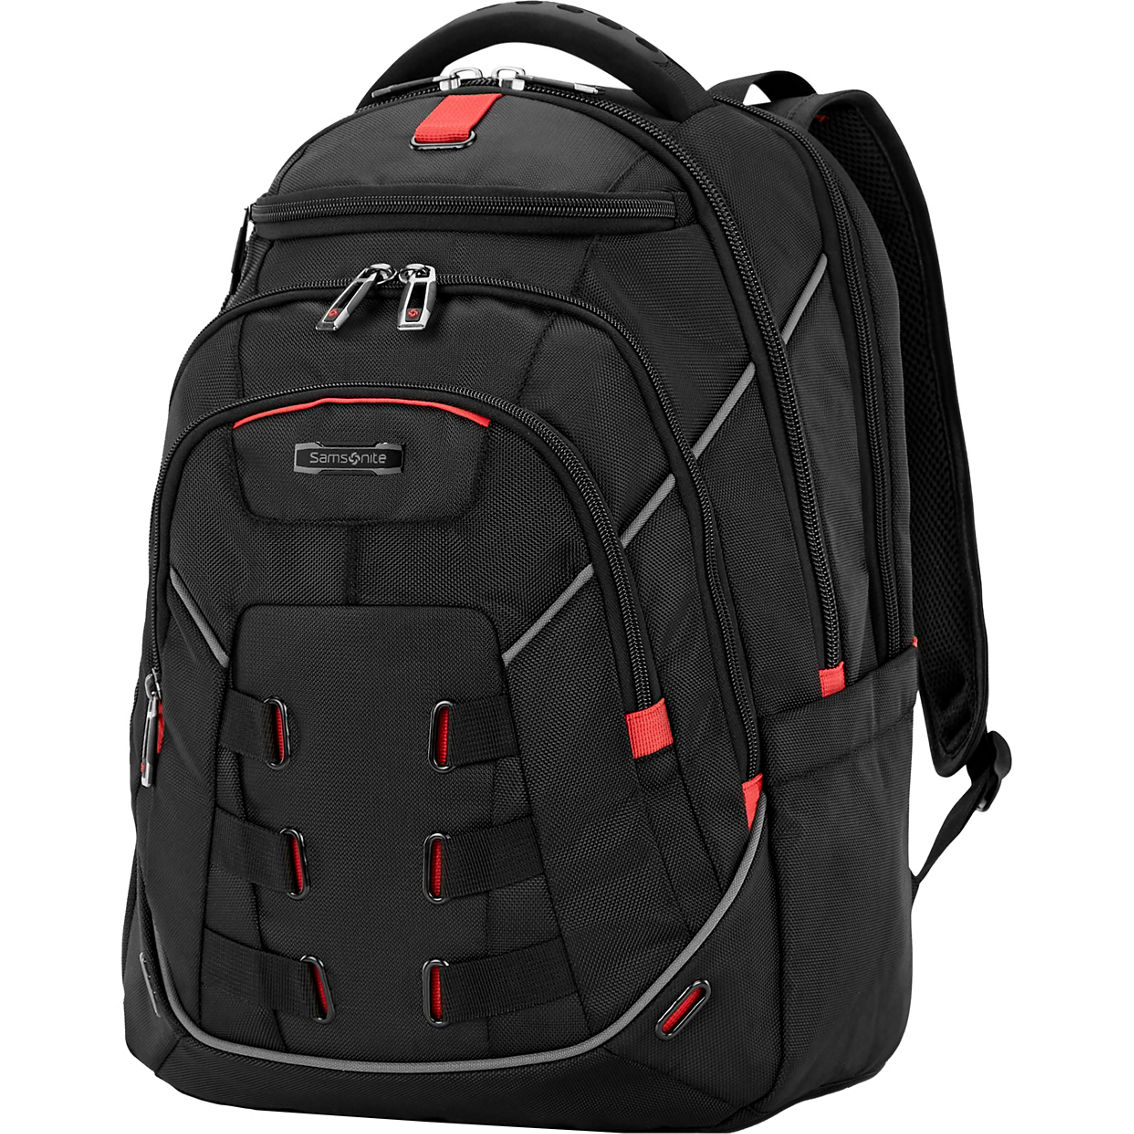 Samsonite Nutech 17 In. Backpack | Backpacks | Clothing & Accessories ...